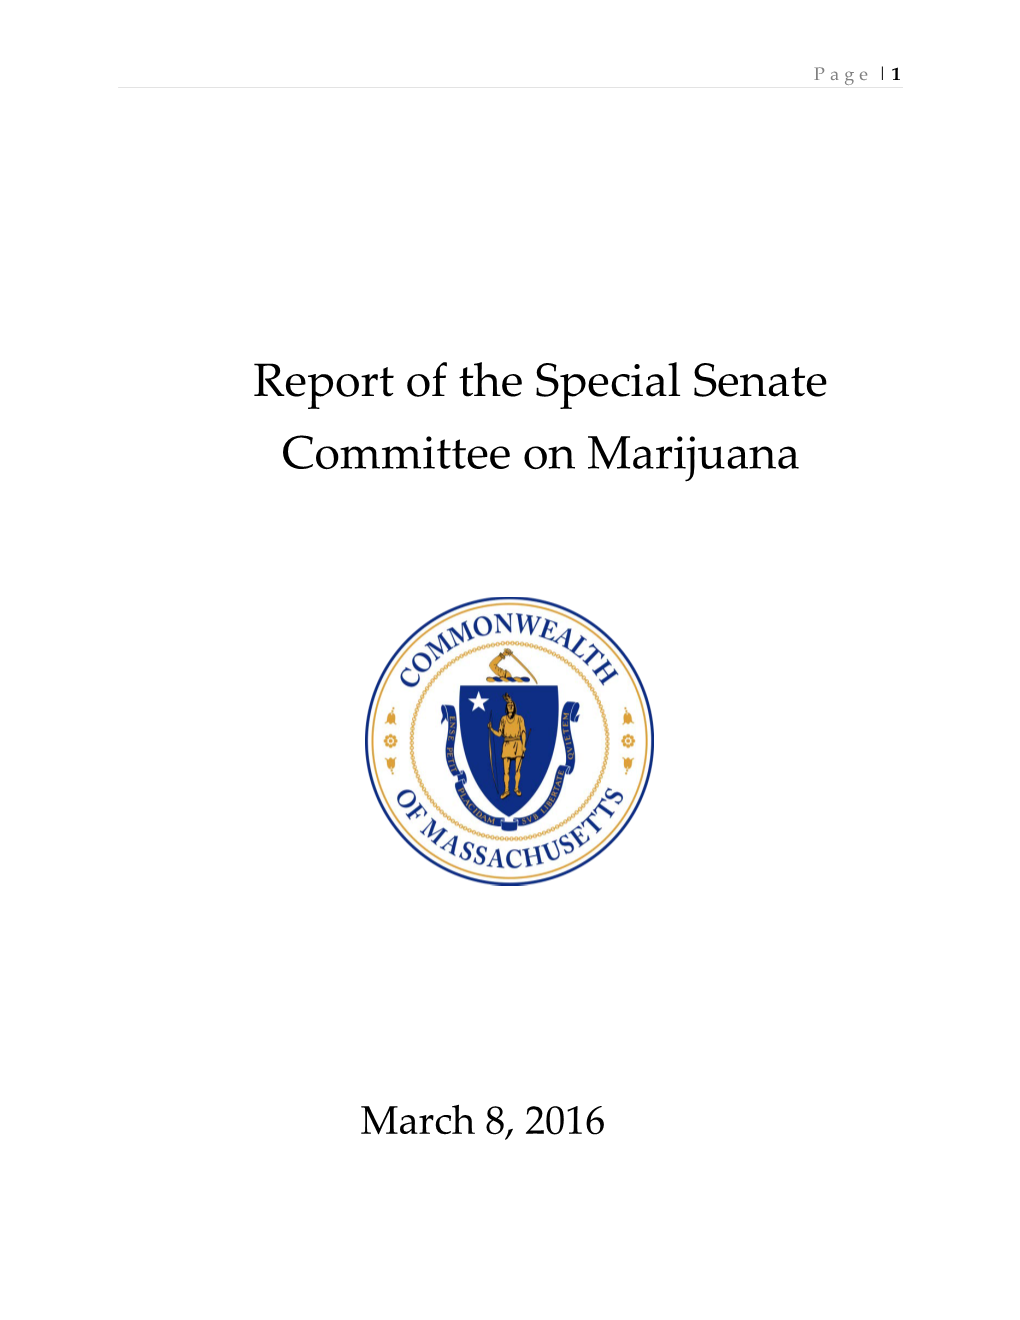 Report of the Special Senate Committee on Marijuana